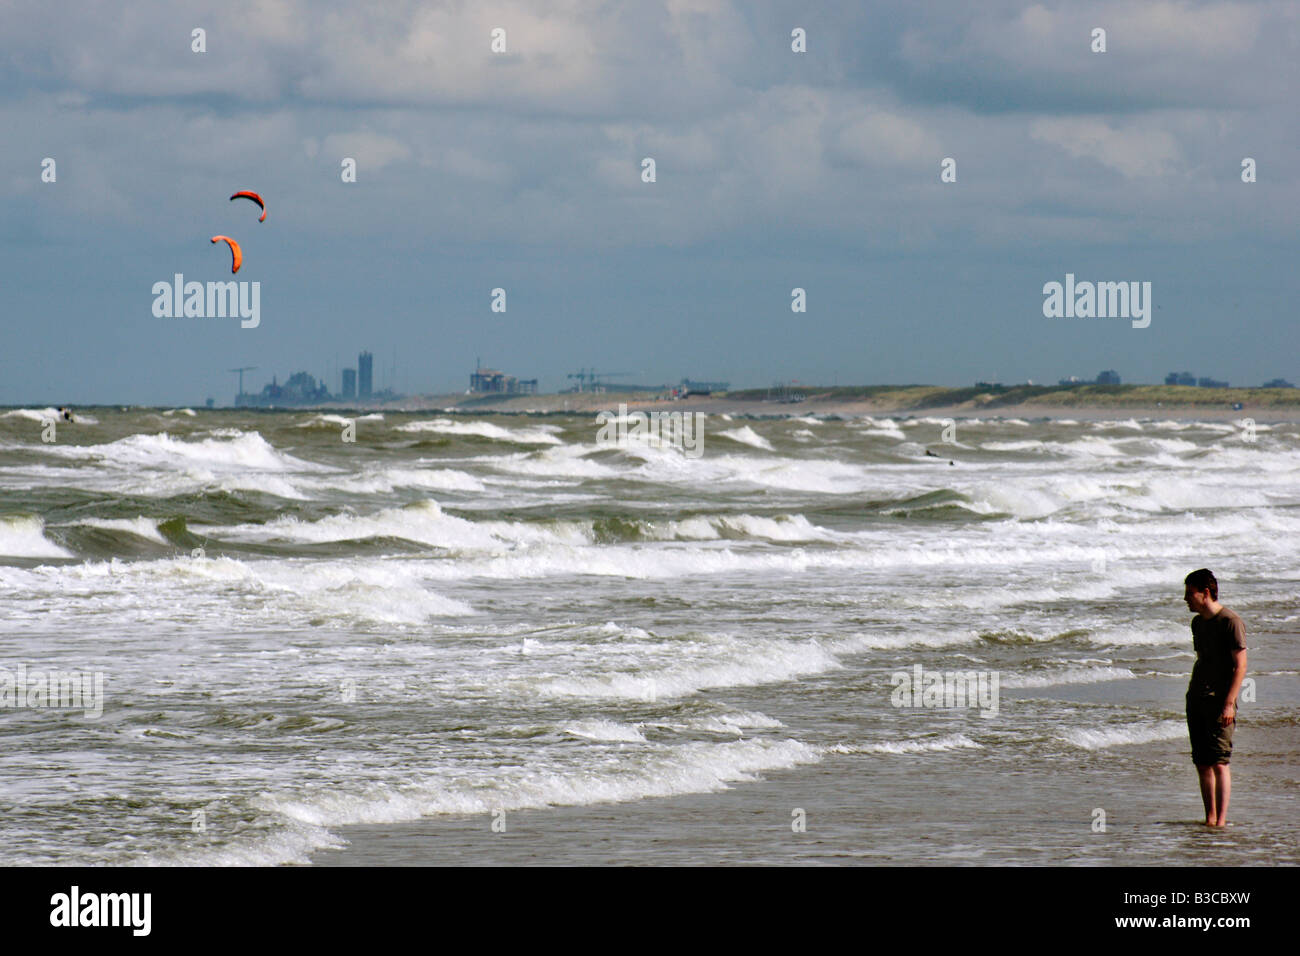 Man standig in sea stormy wather high wind huge waves kite flying Den Haag in background distance beach Hoek van Holland Stock Photo